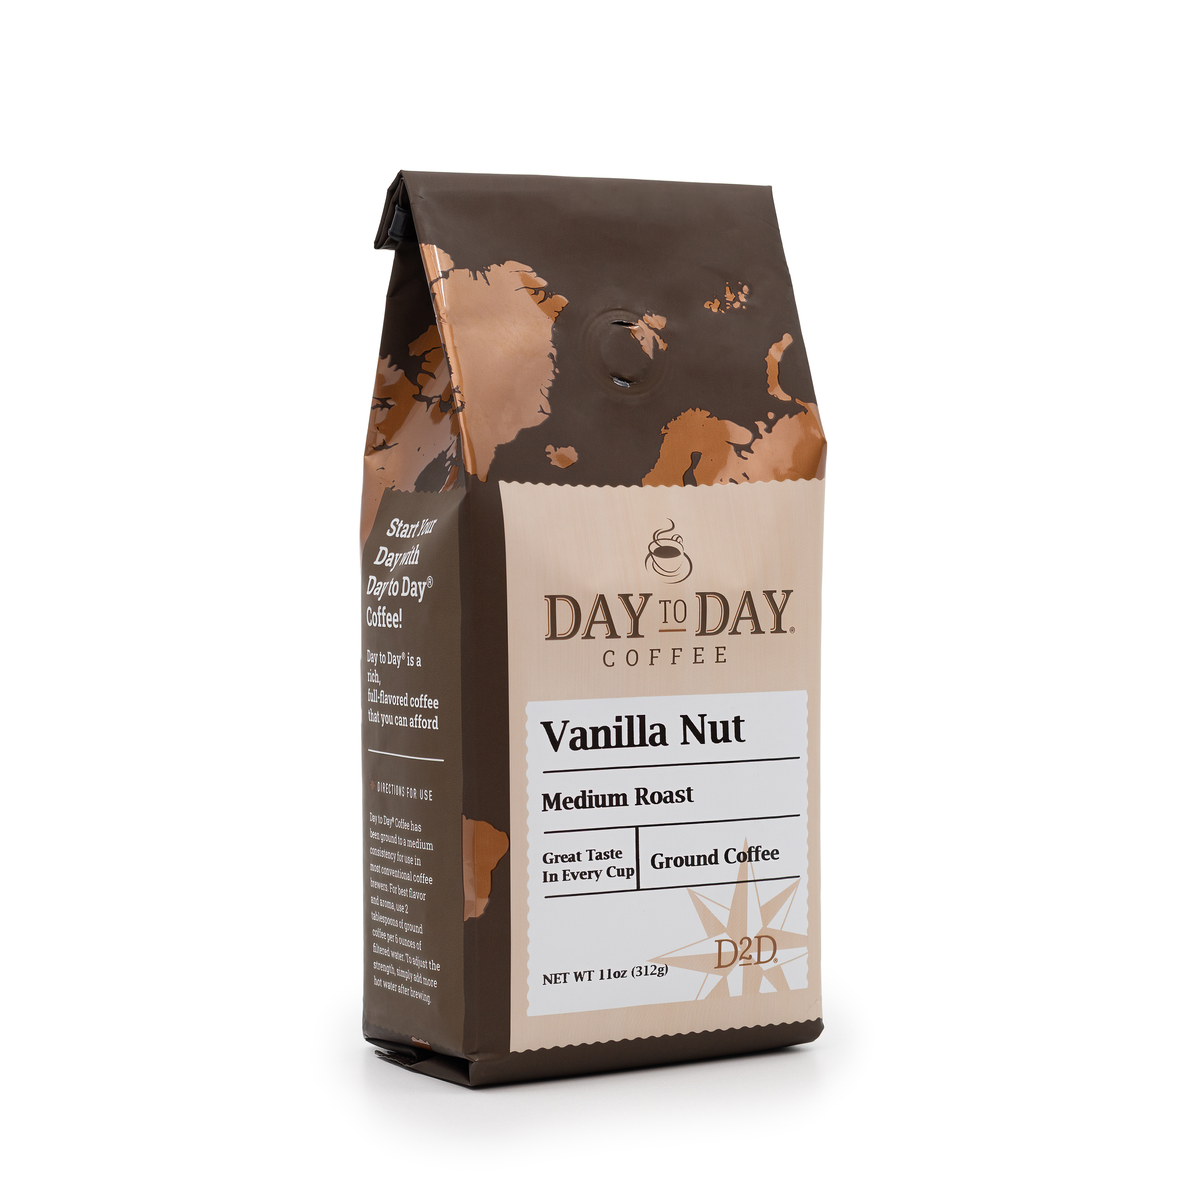 Day to day coffee 11oz vanilla nut medium roast ground coffee - 3